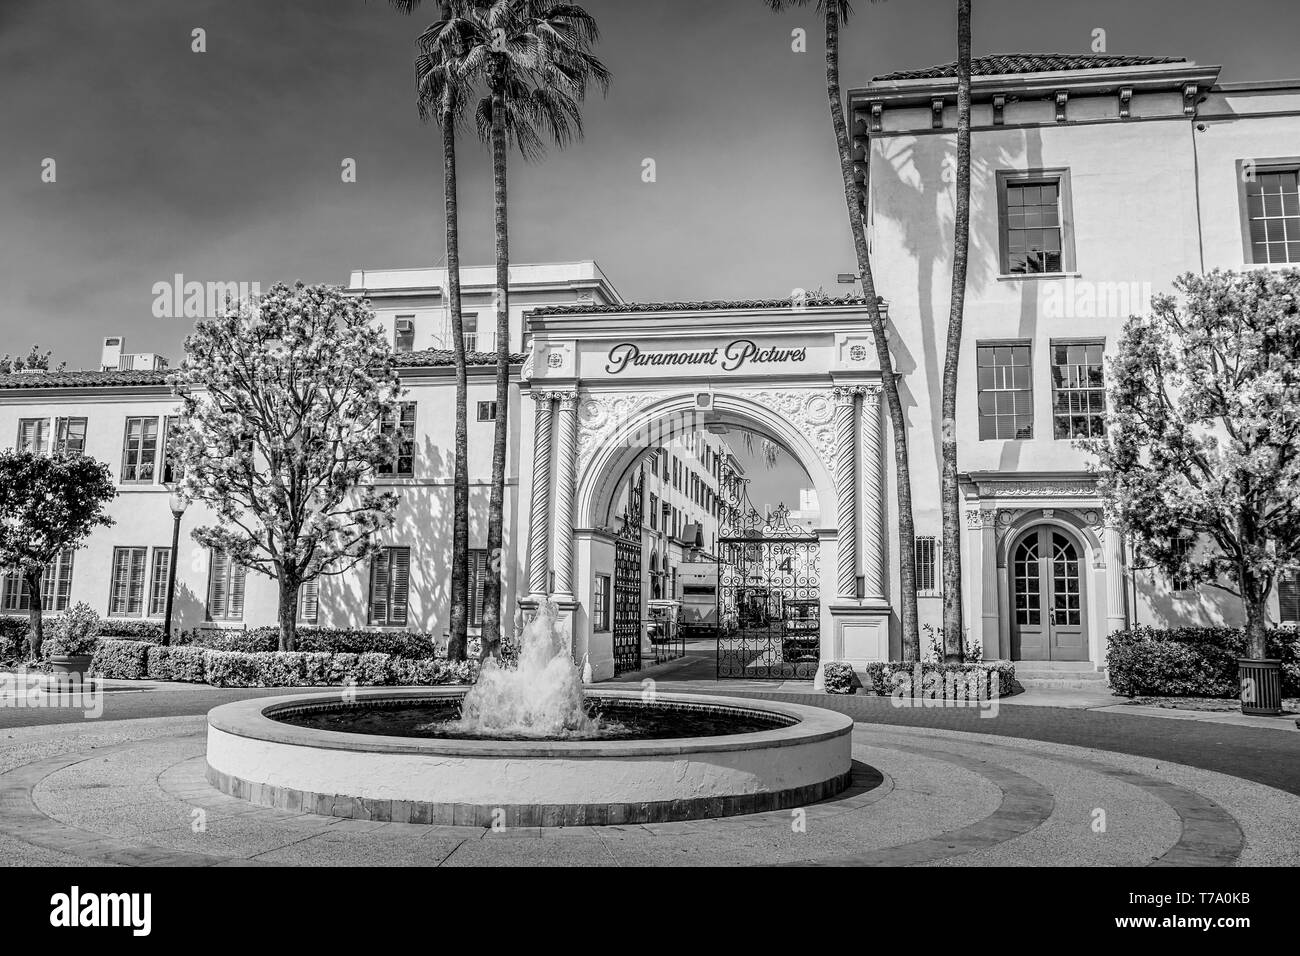 Paramount Pictures Film Studios in Los Angeles, Kalifornien, USA - 18. MÄRZ 2019 Stockfoto